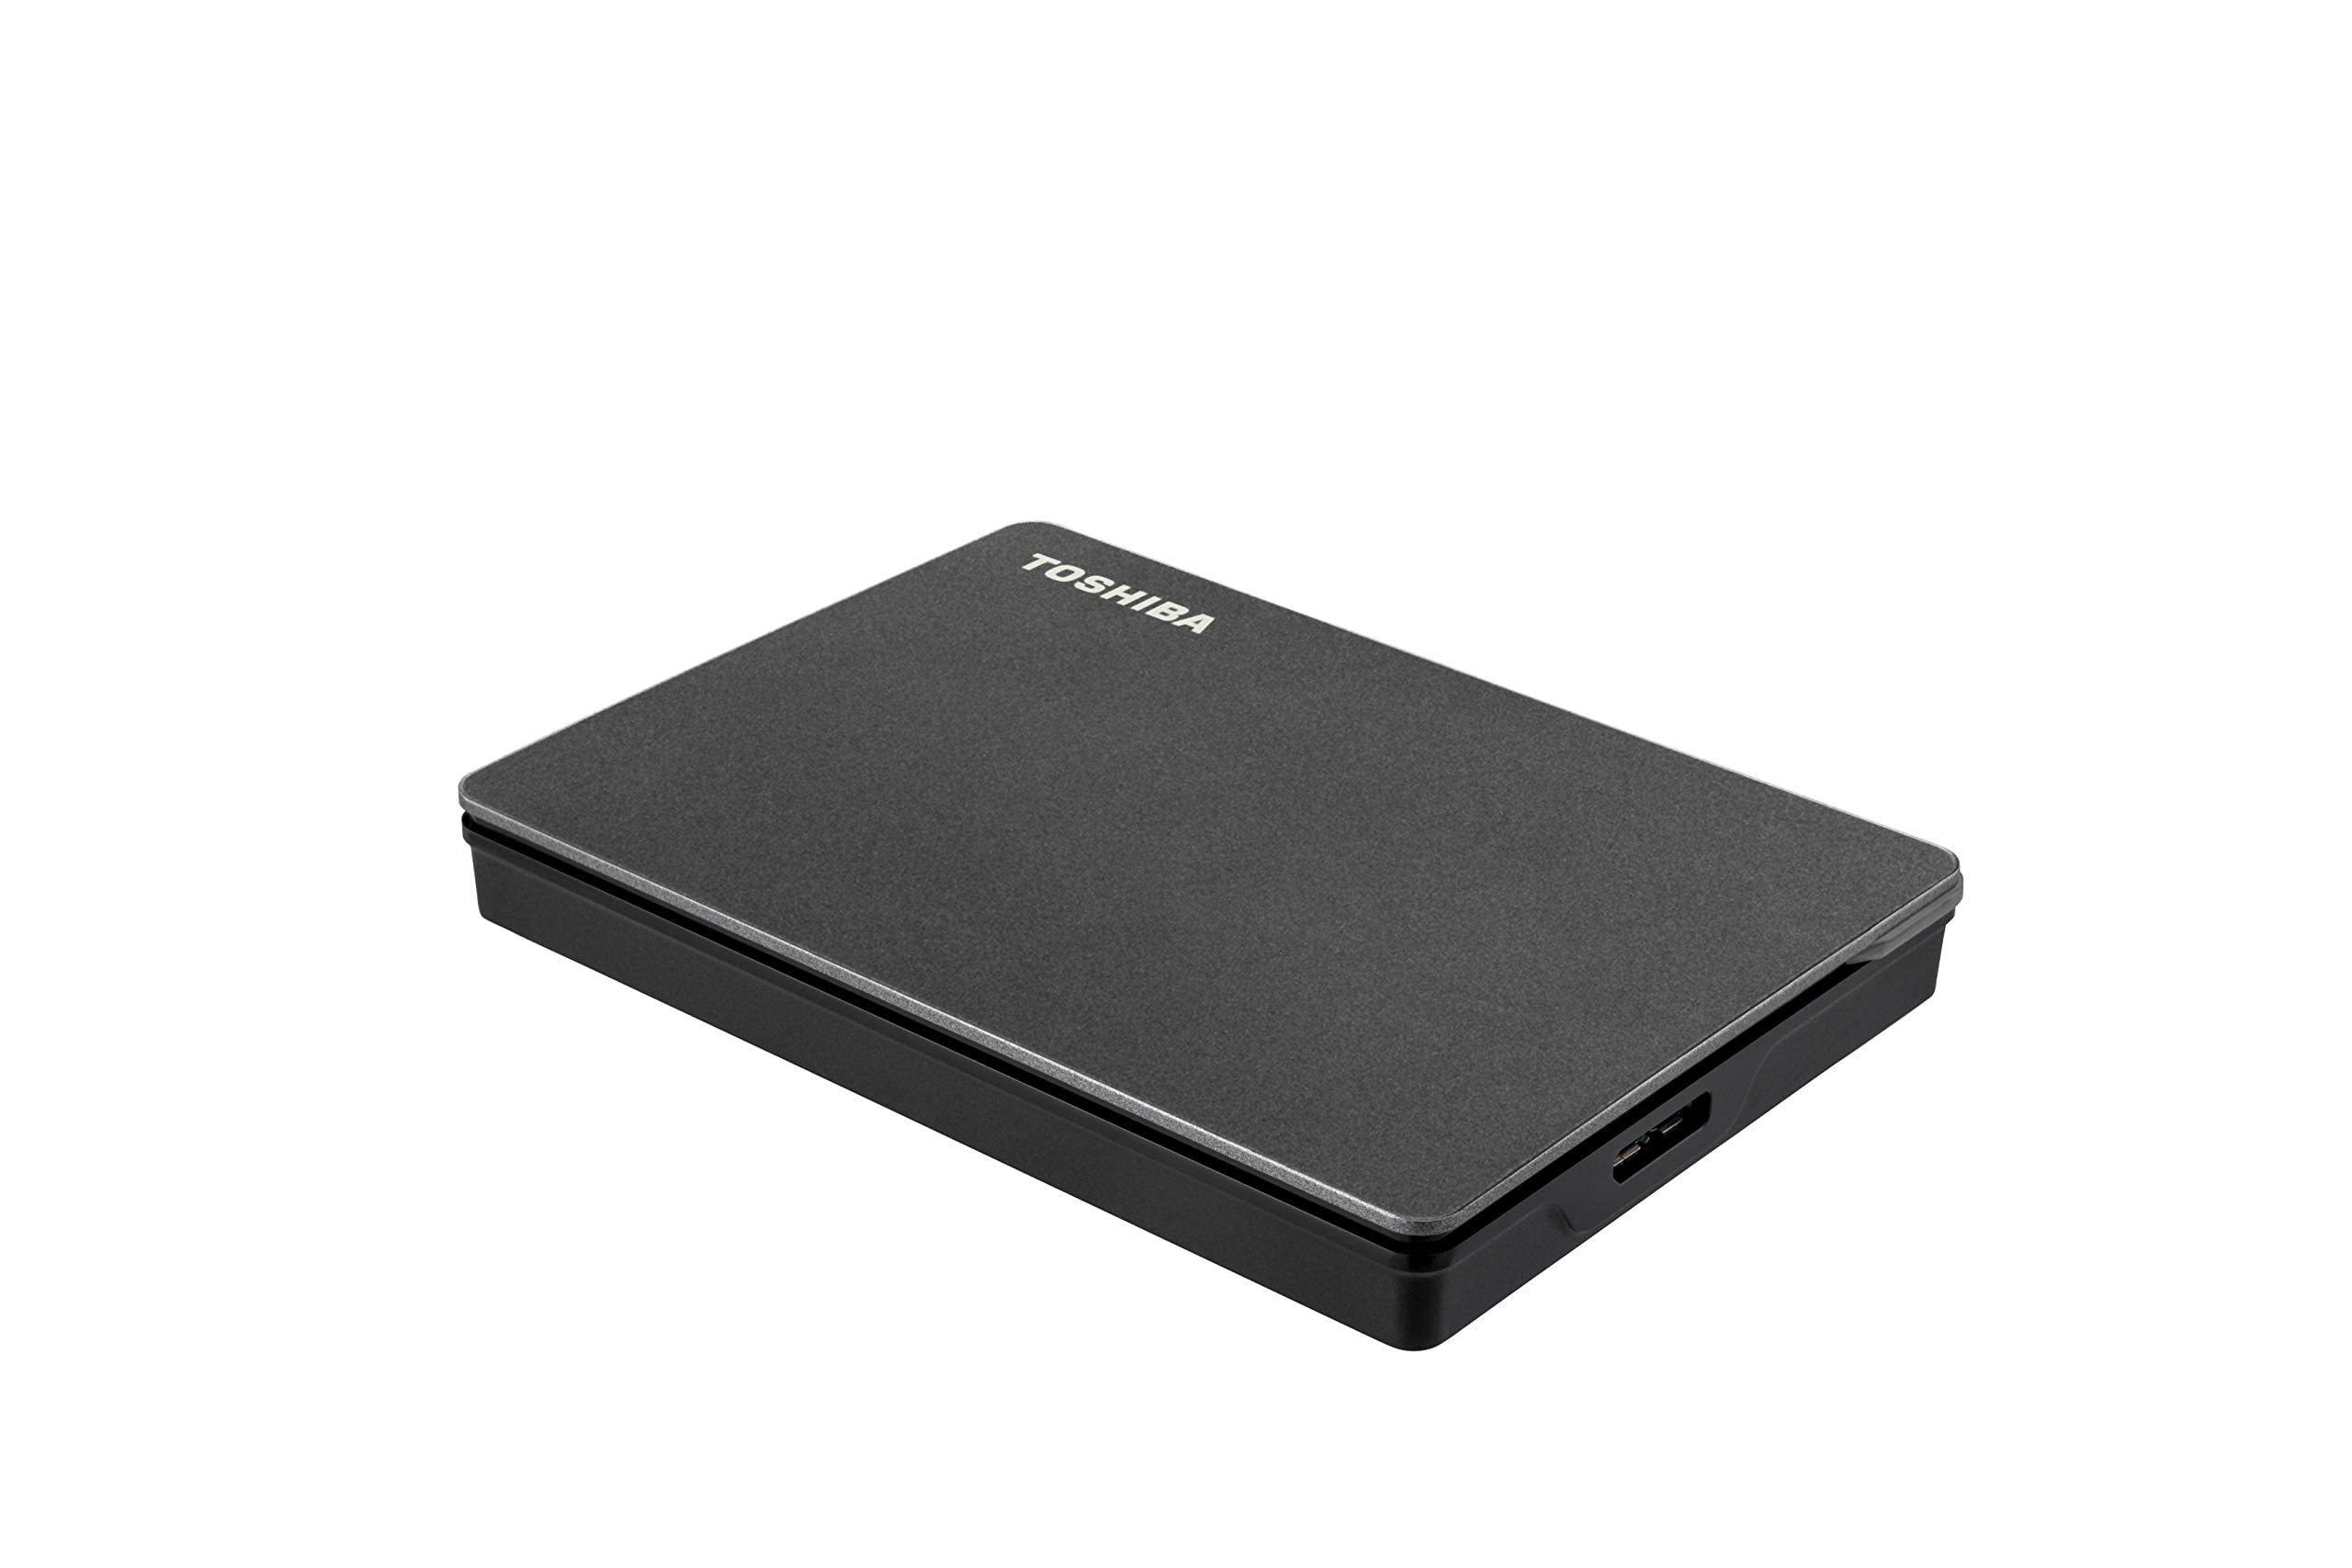 Toshiba Canvio Gaming 2TB Portable External Hard Drive USB 3.0, Black for PlayStation, Xbox, PC & Mac - HDTX120XK3AA